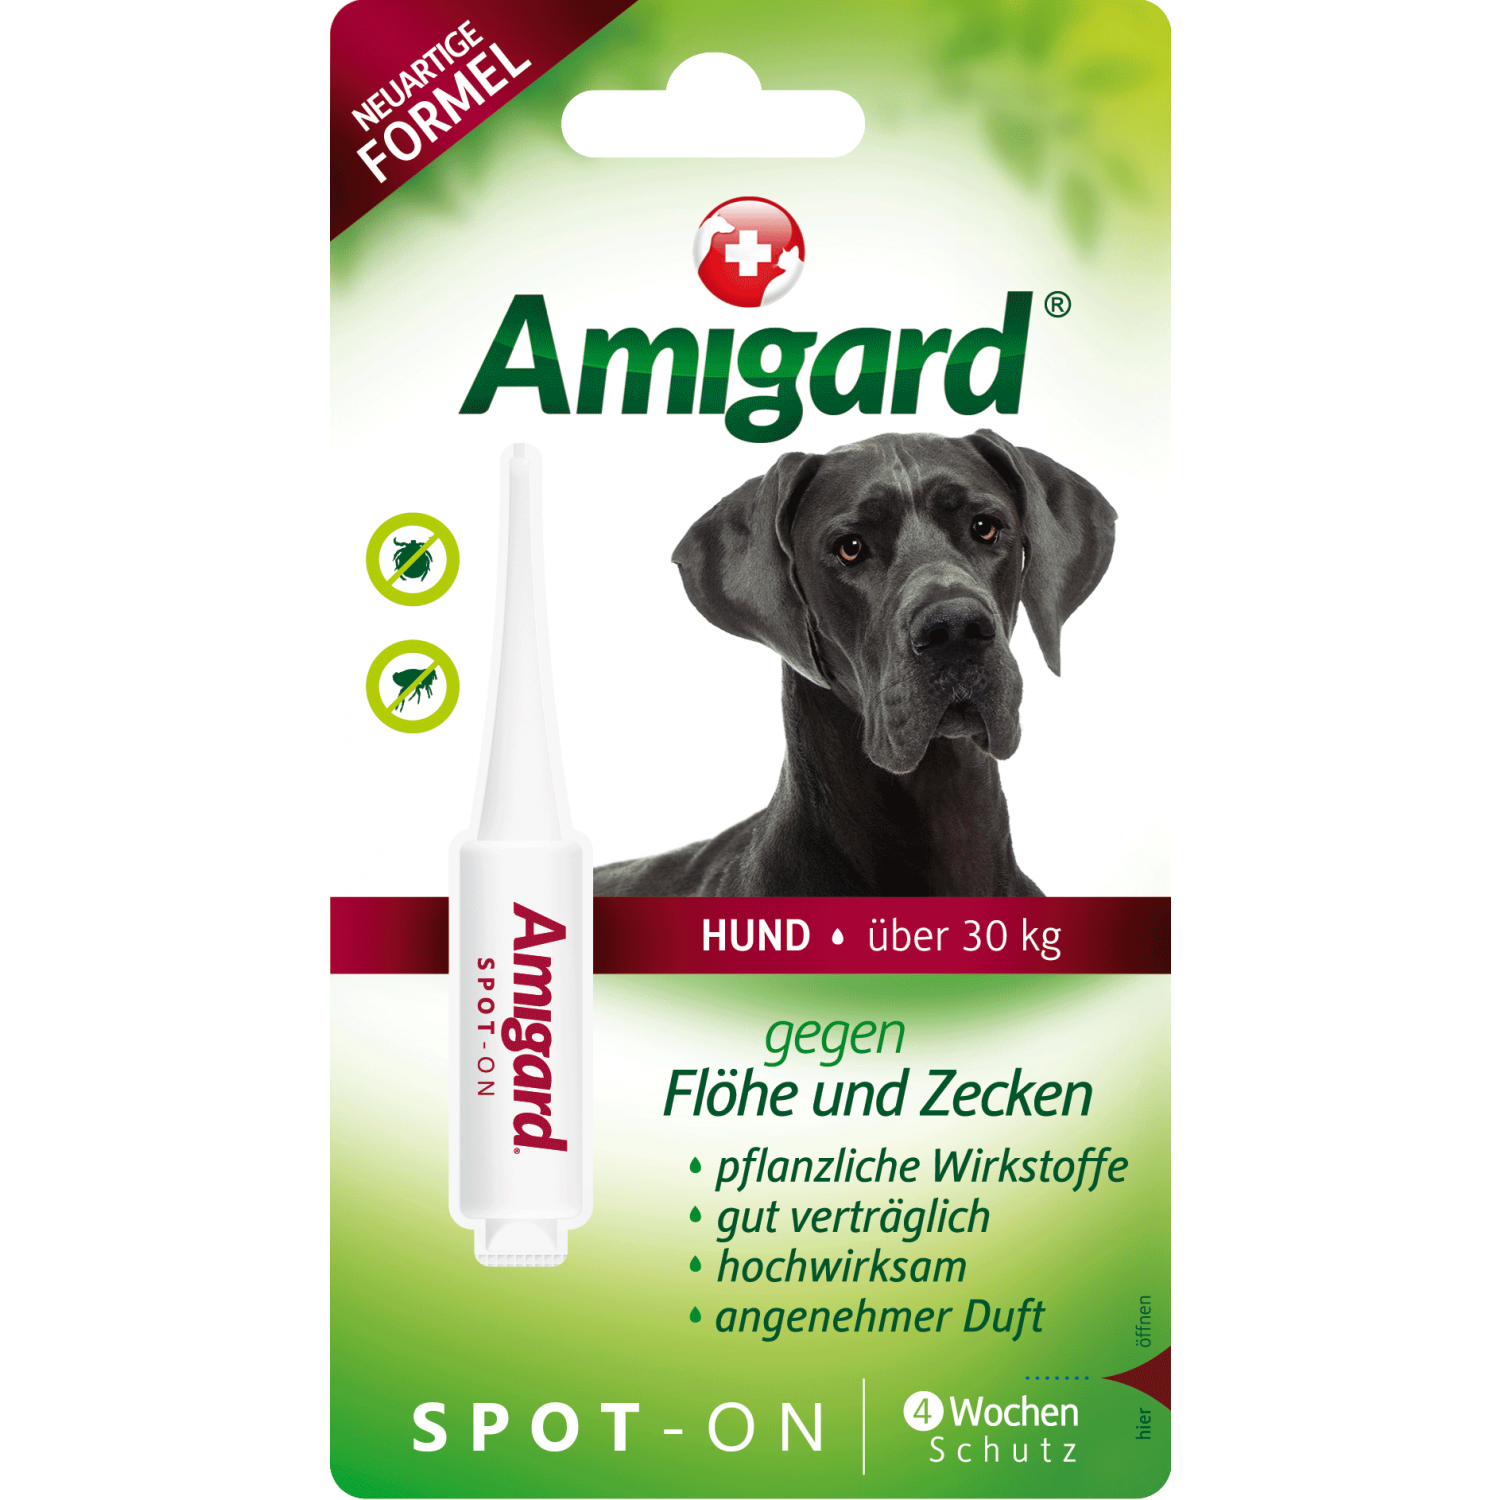 Amigard Spot-on für sehr große Hunde ab 30 kg, 1x6ml